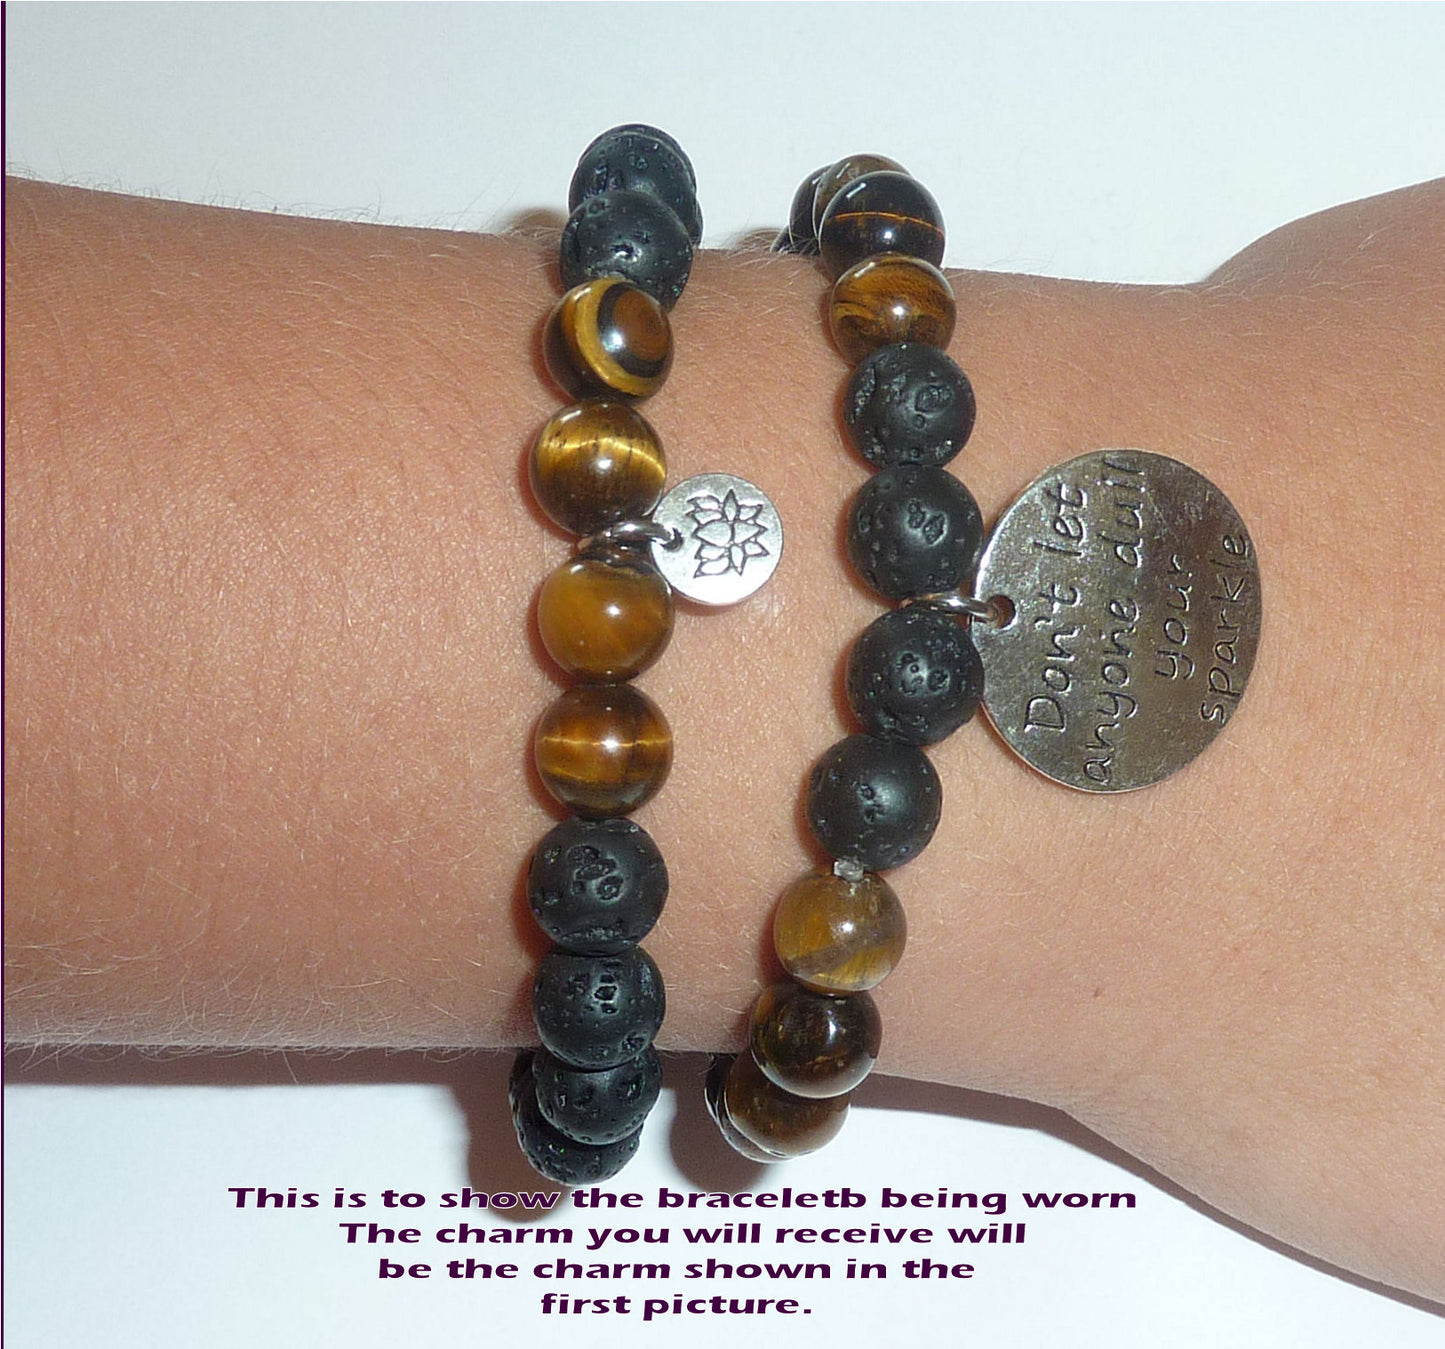 Sister of the Groom - Women's Tiger Eye & Black Lava Diffuser Yoga Beads Charm Stretch Bracelet Gift Set